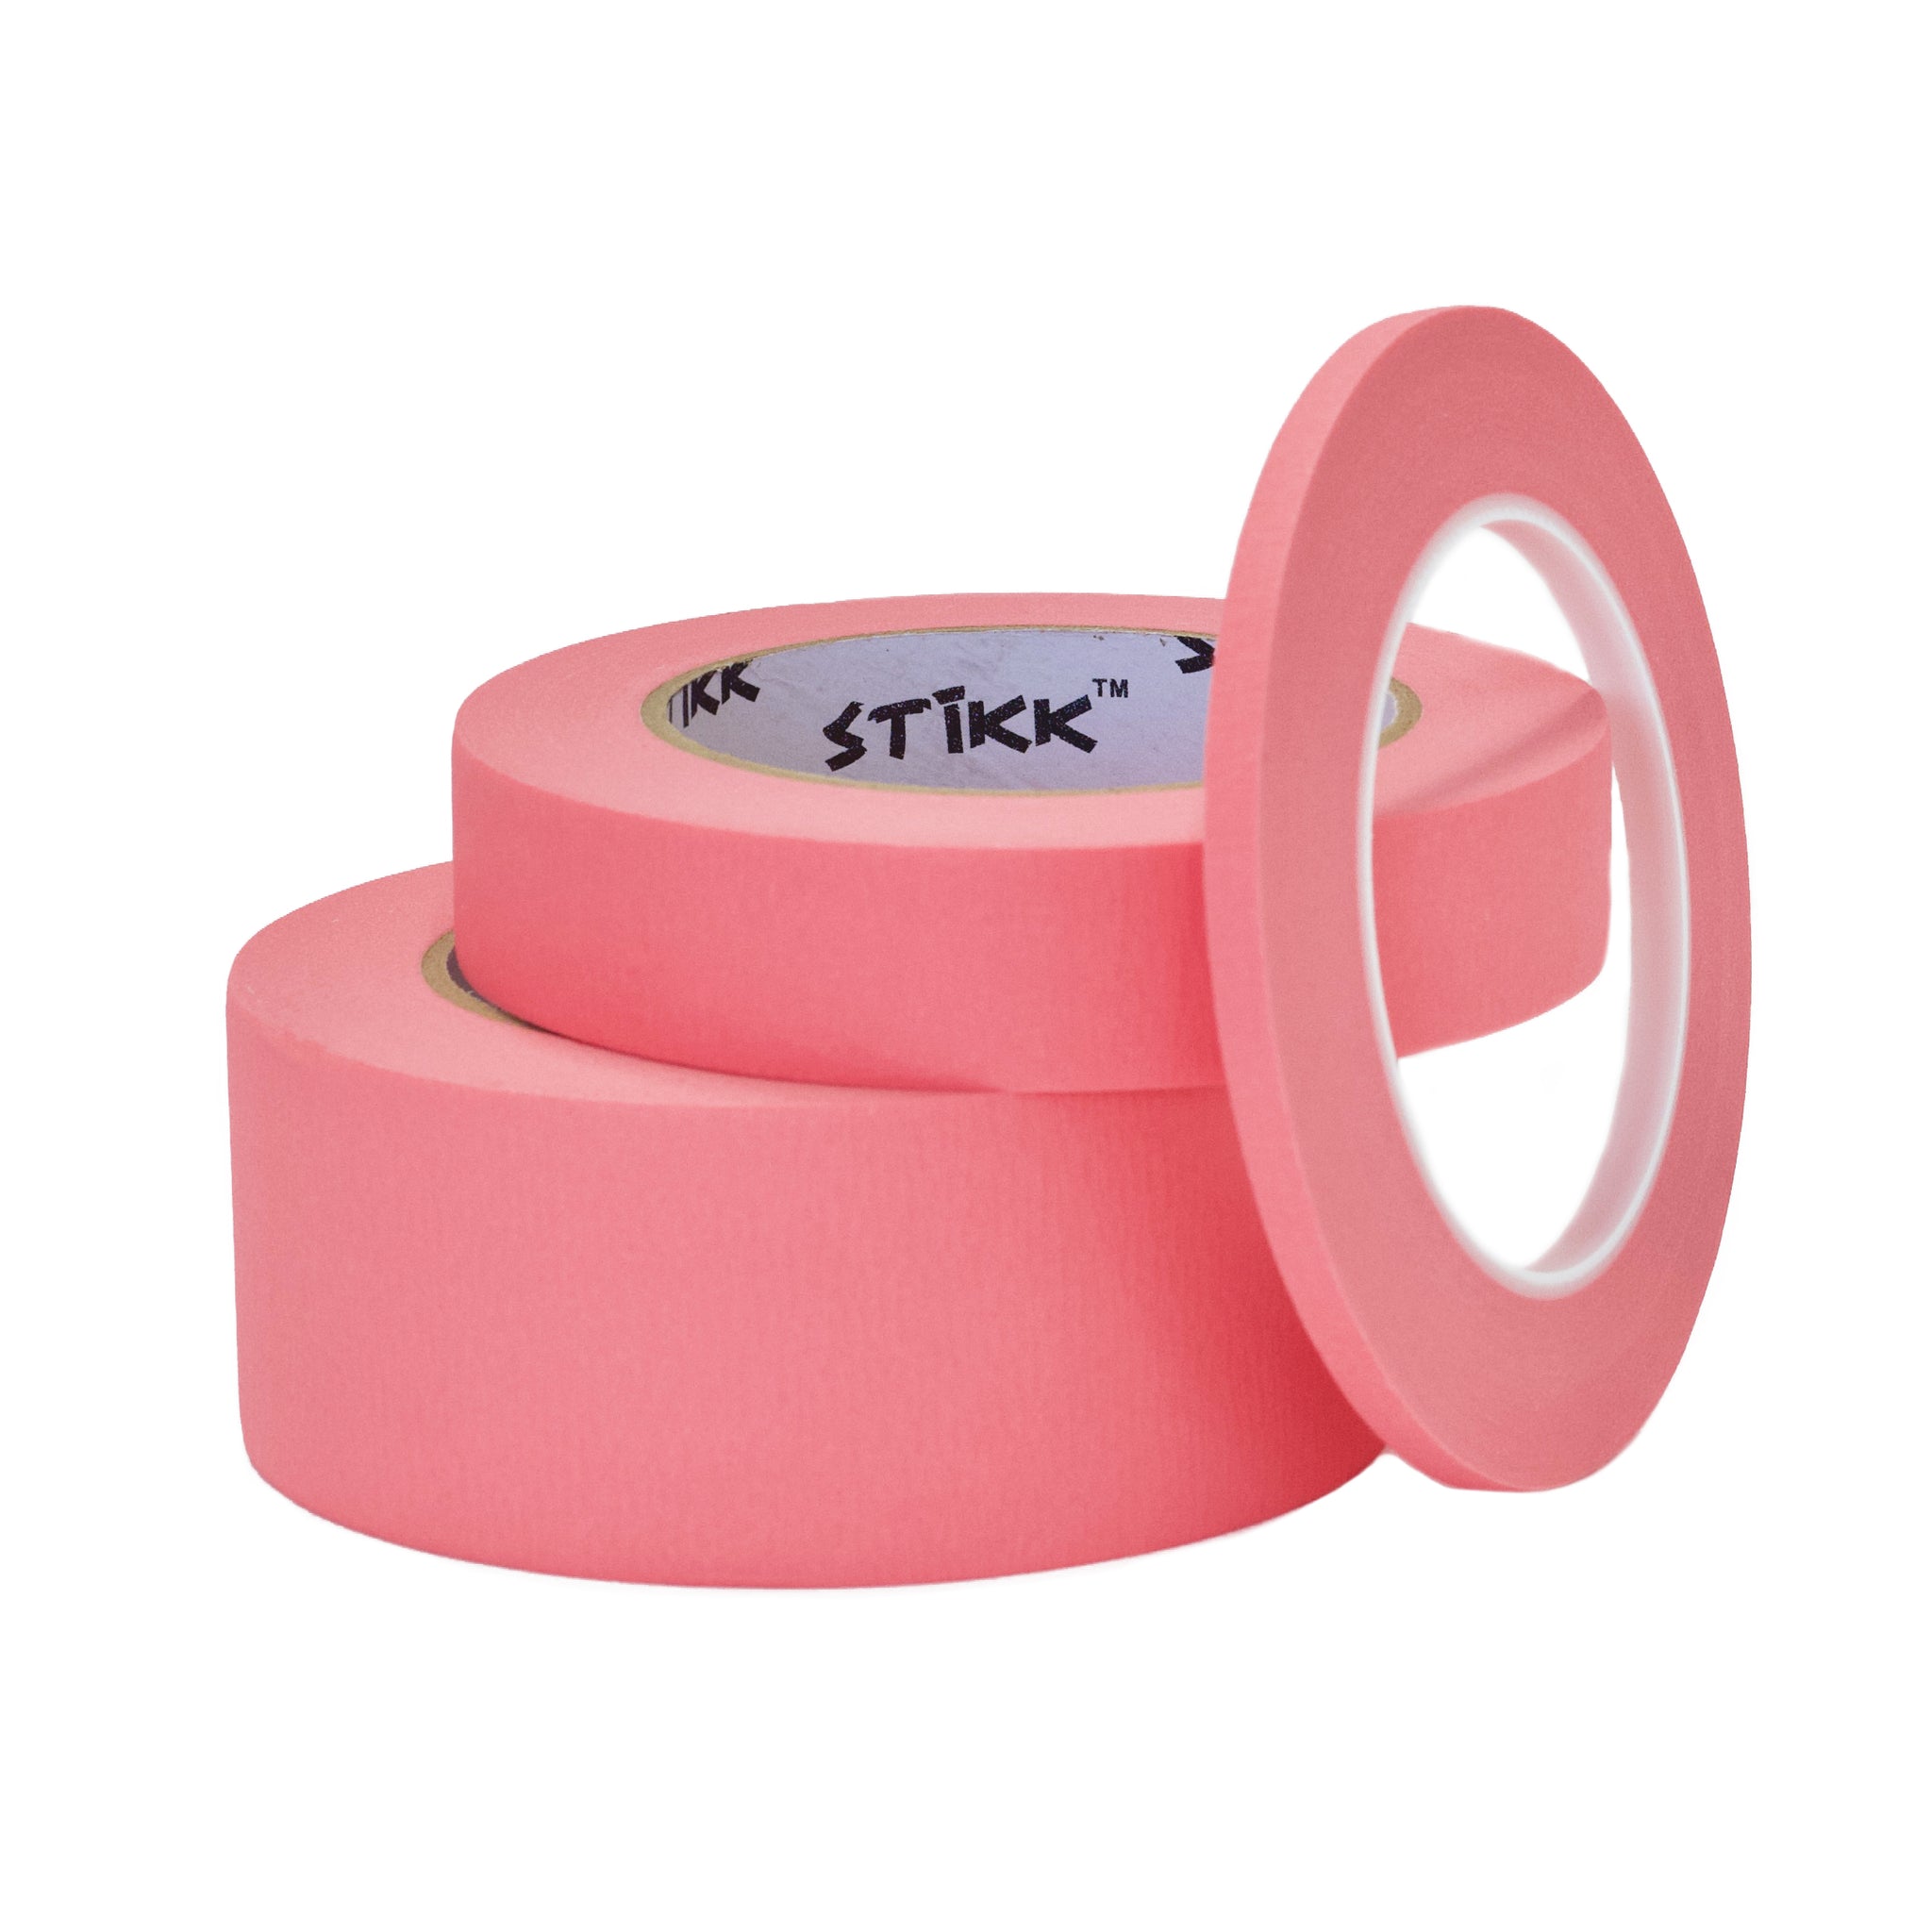 3 pack 1/4 .25 inch x 60yd (6mm x 55m) Thin STIKK Pink Painters Masking  Tape